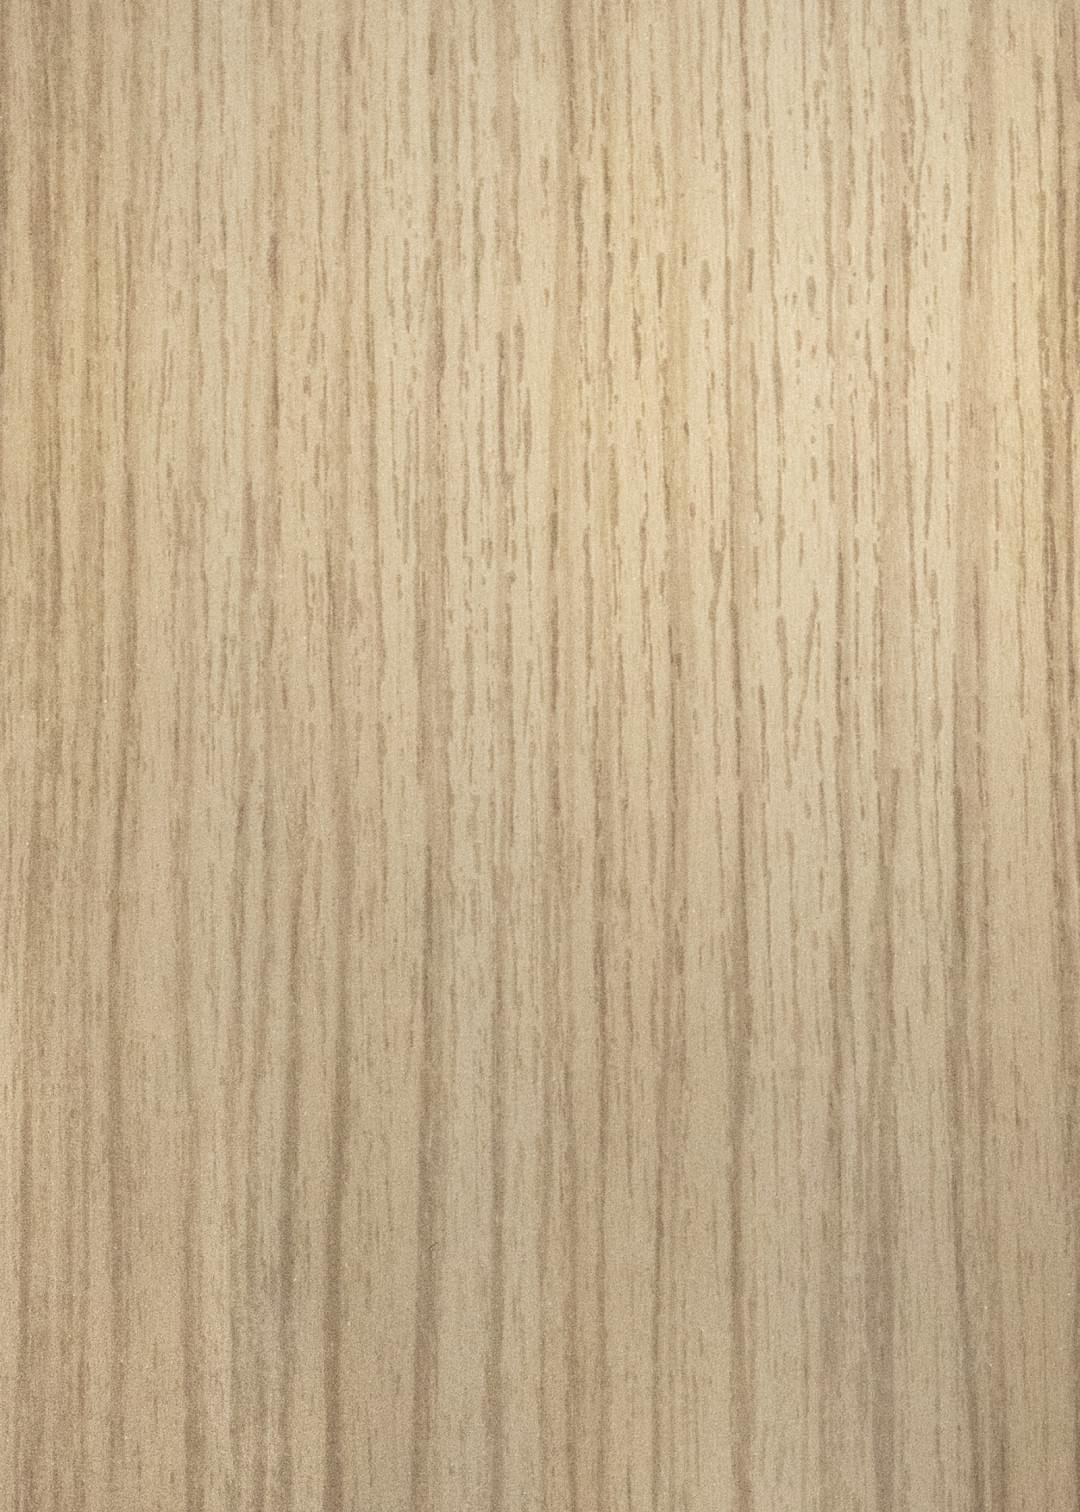 Woodgrain (Oak) from DNP Singapore